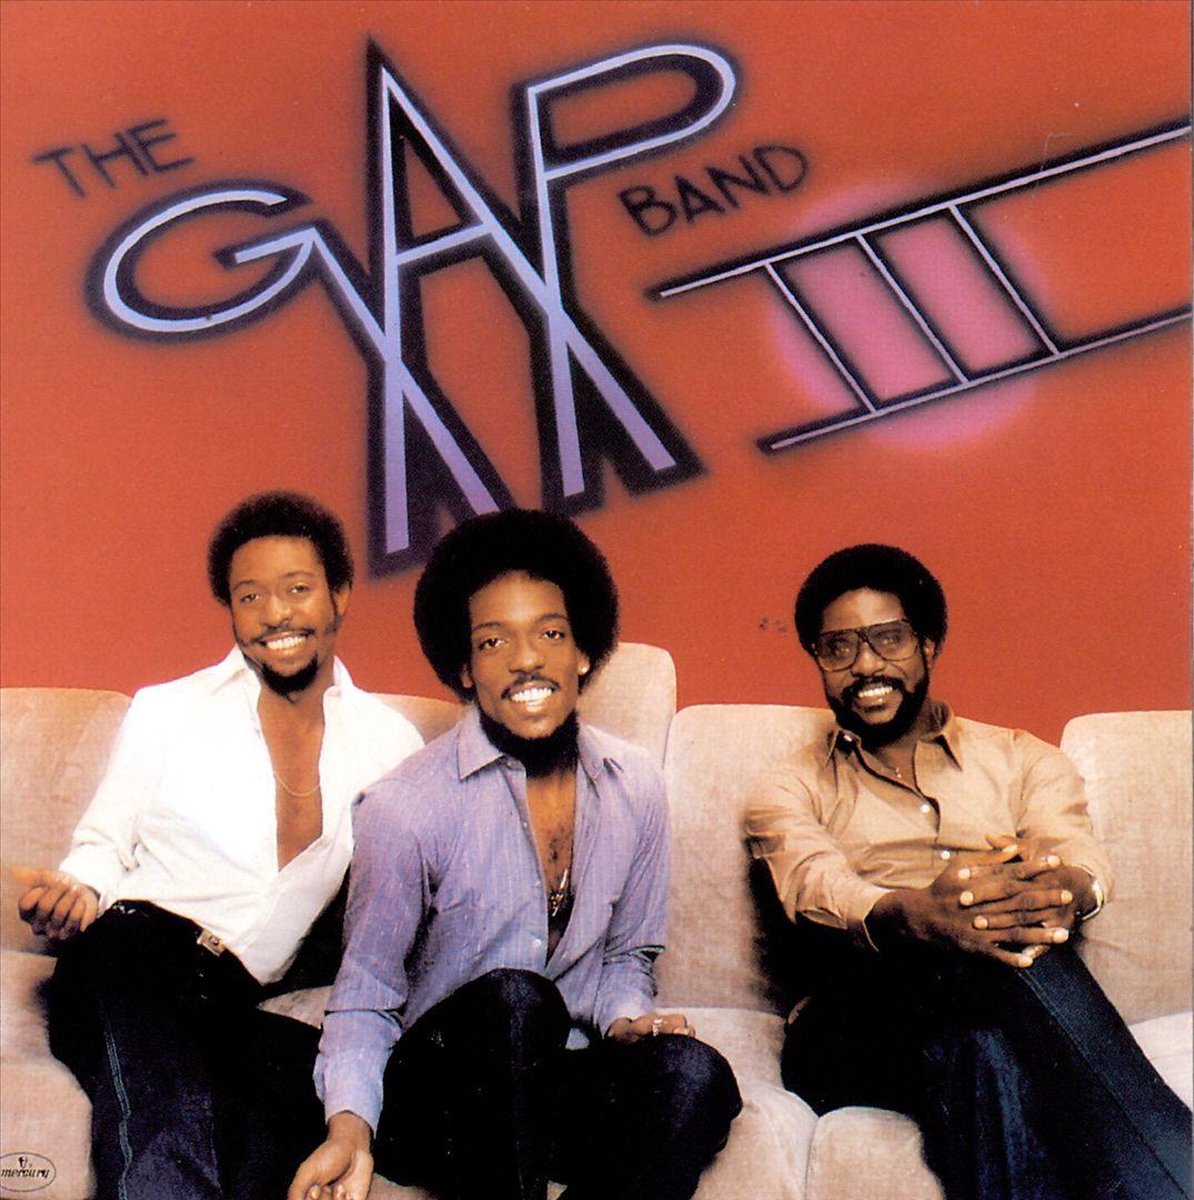 The Gap Band III - The Gap Band